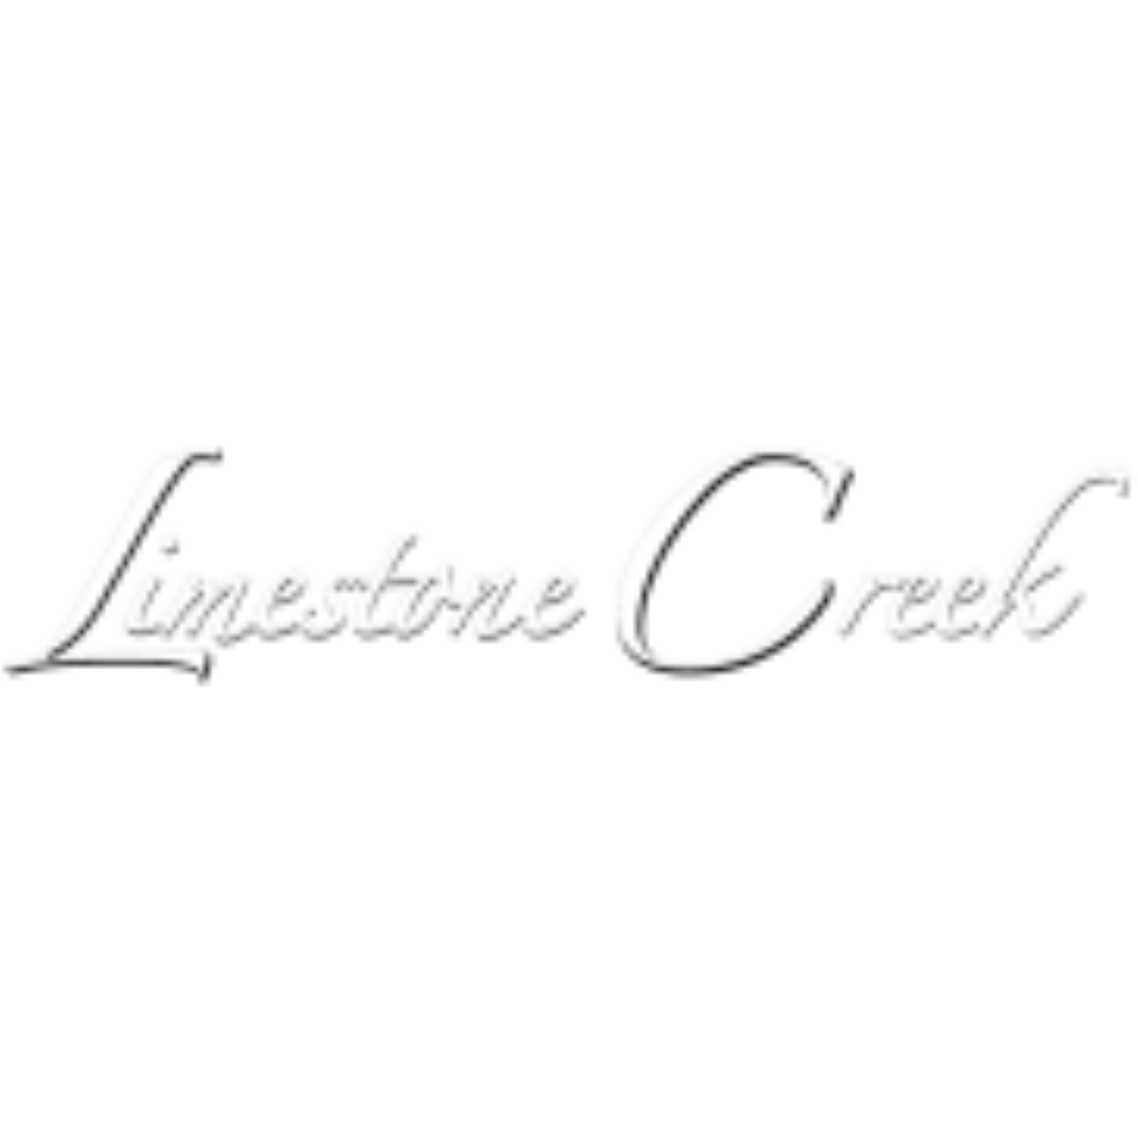 Limestone Creek Apartment Homes - Madison, AL 35756 - (256)724-6279 | ShowMeLocal.com